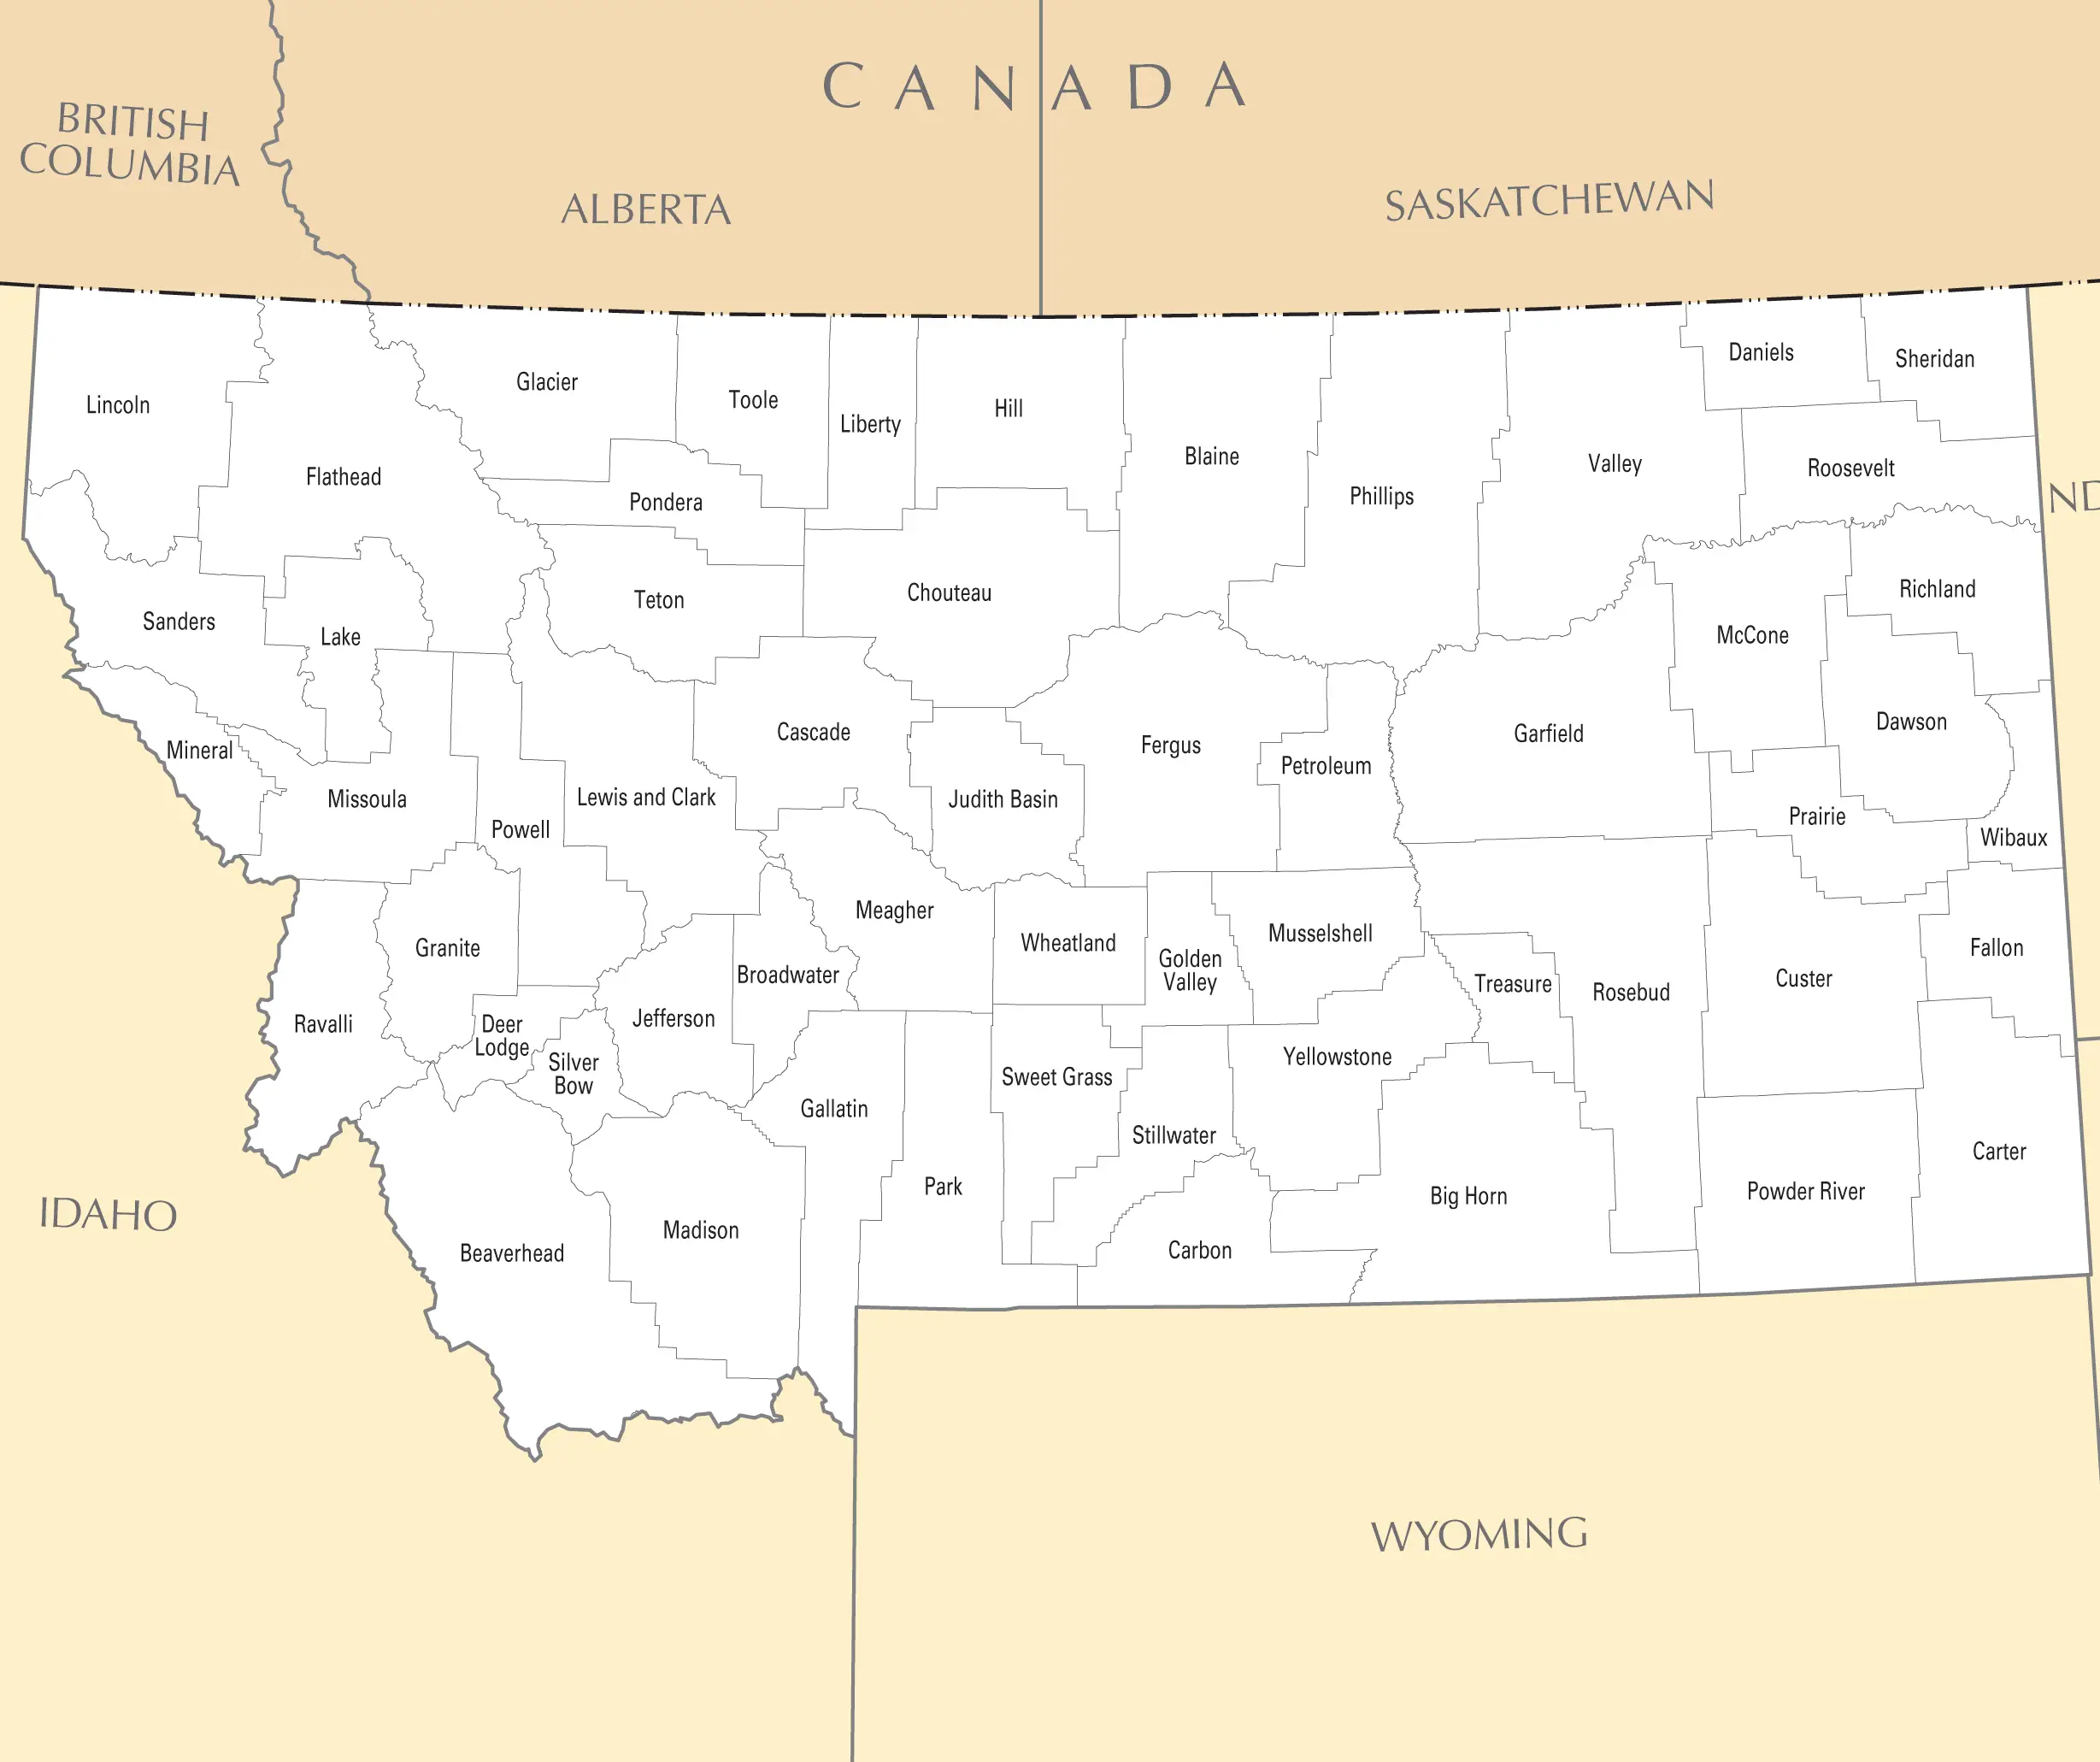 Montana County Map